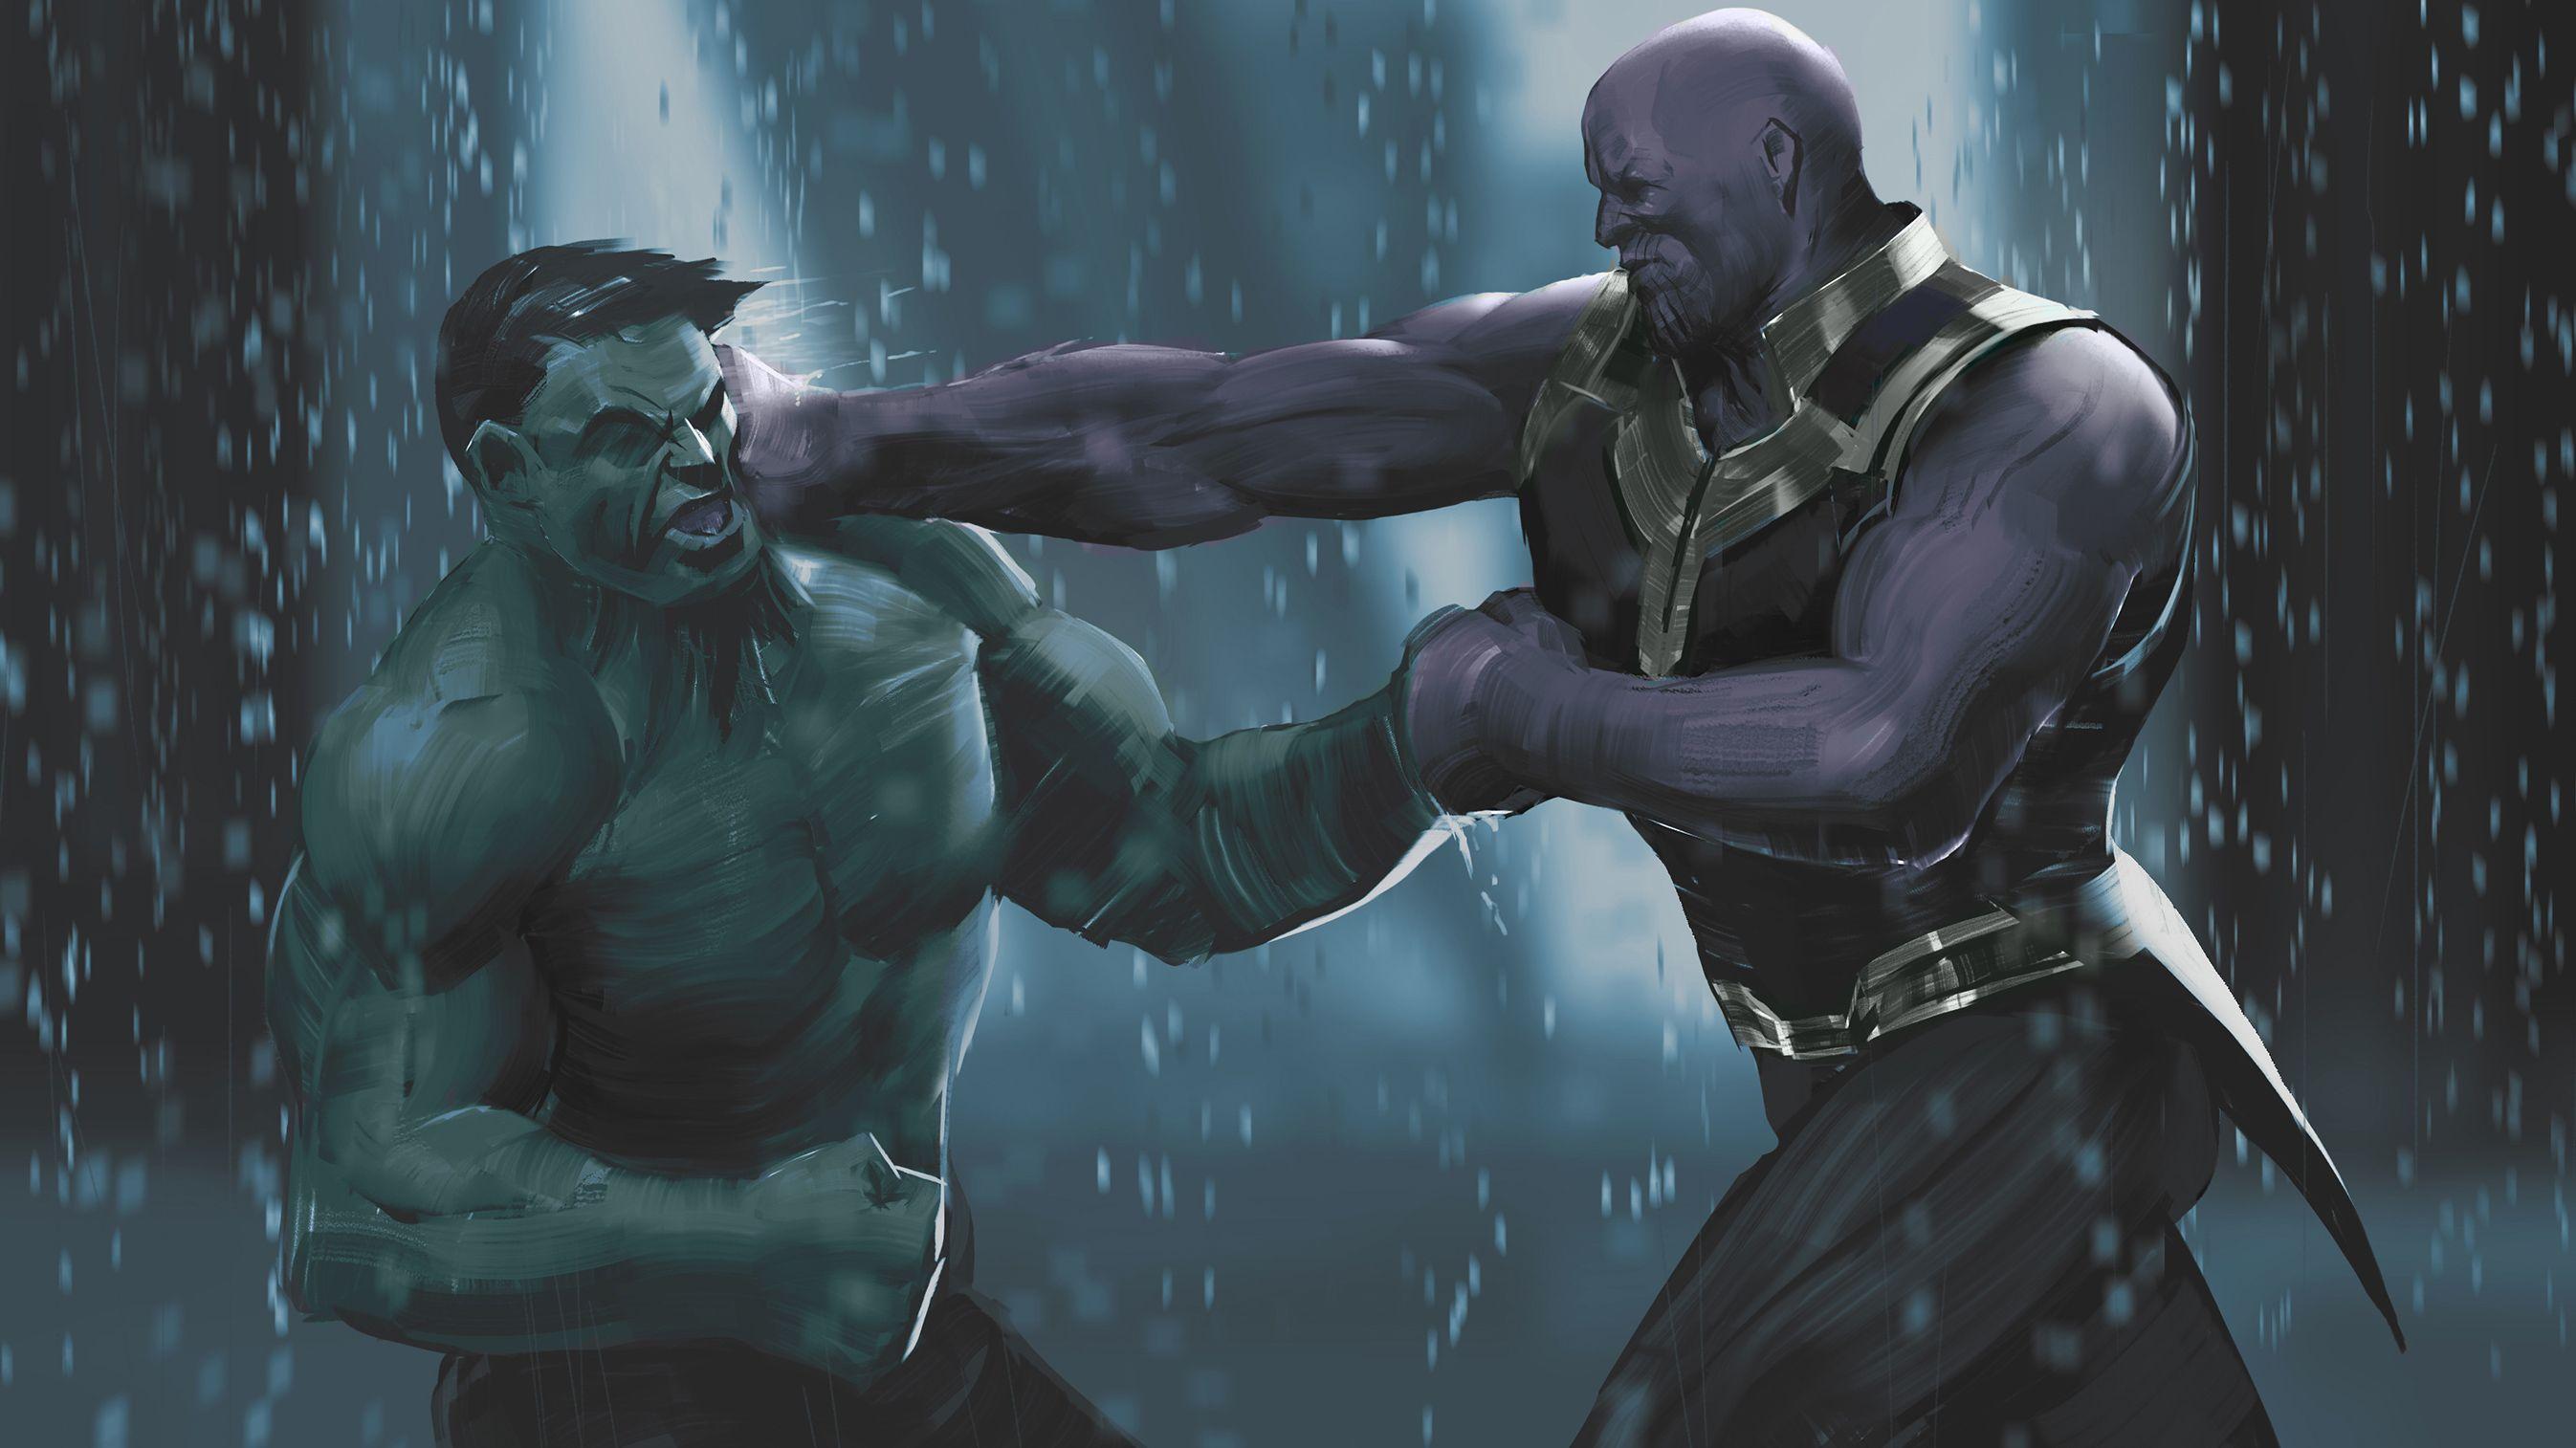 Thanos vs Hulk Wallpaper Free Thanos vs Hulk